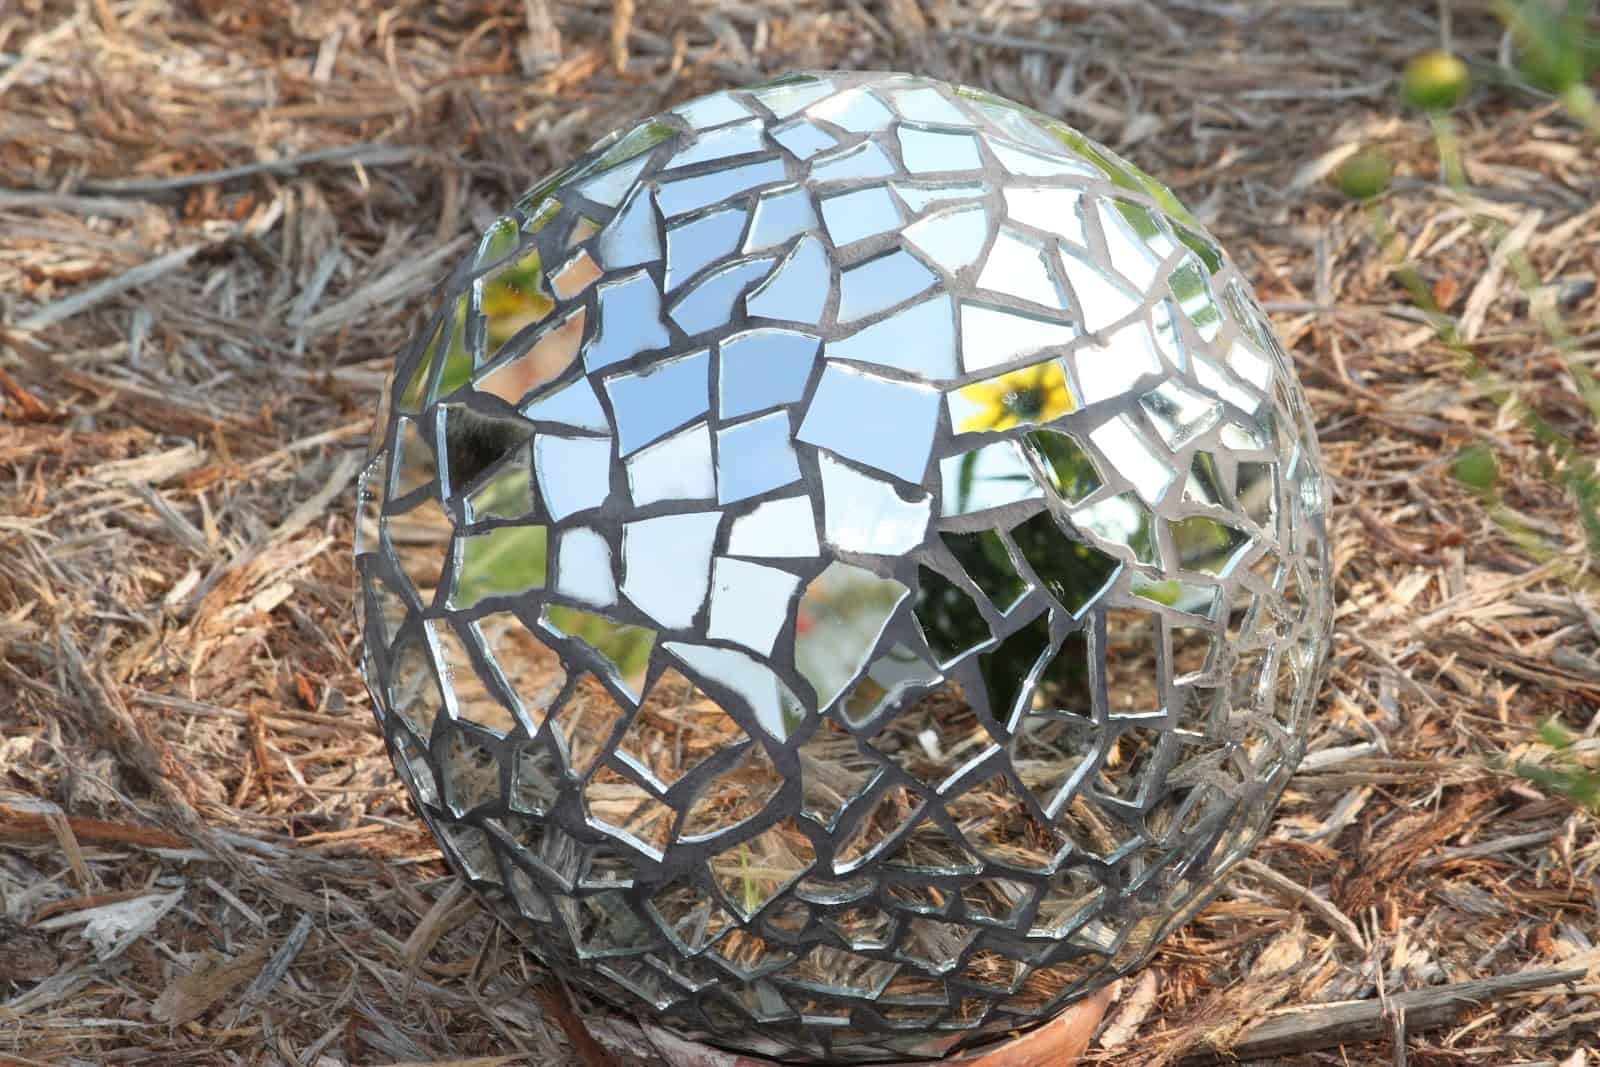 Rolling in Glitz and Glam: Amazingly Fun DIY Garden Balls!